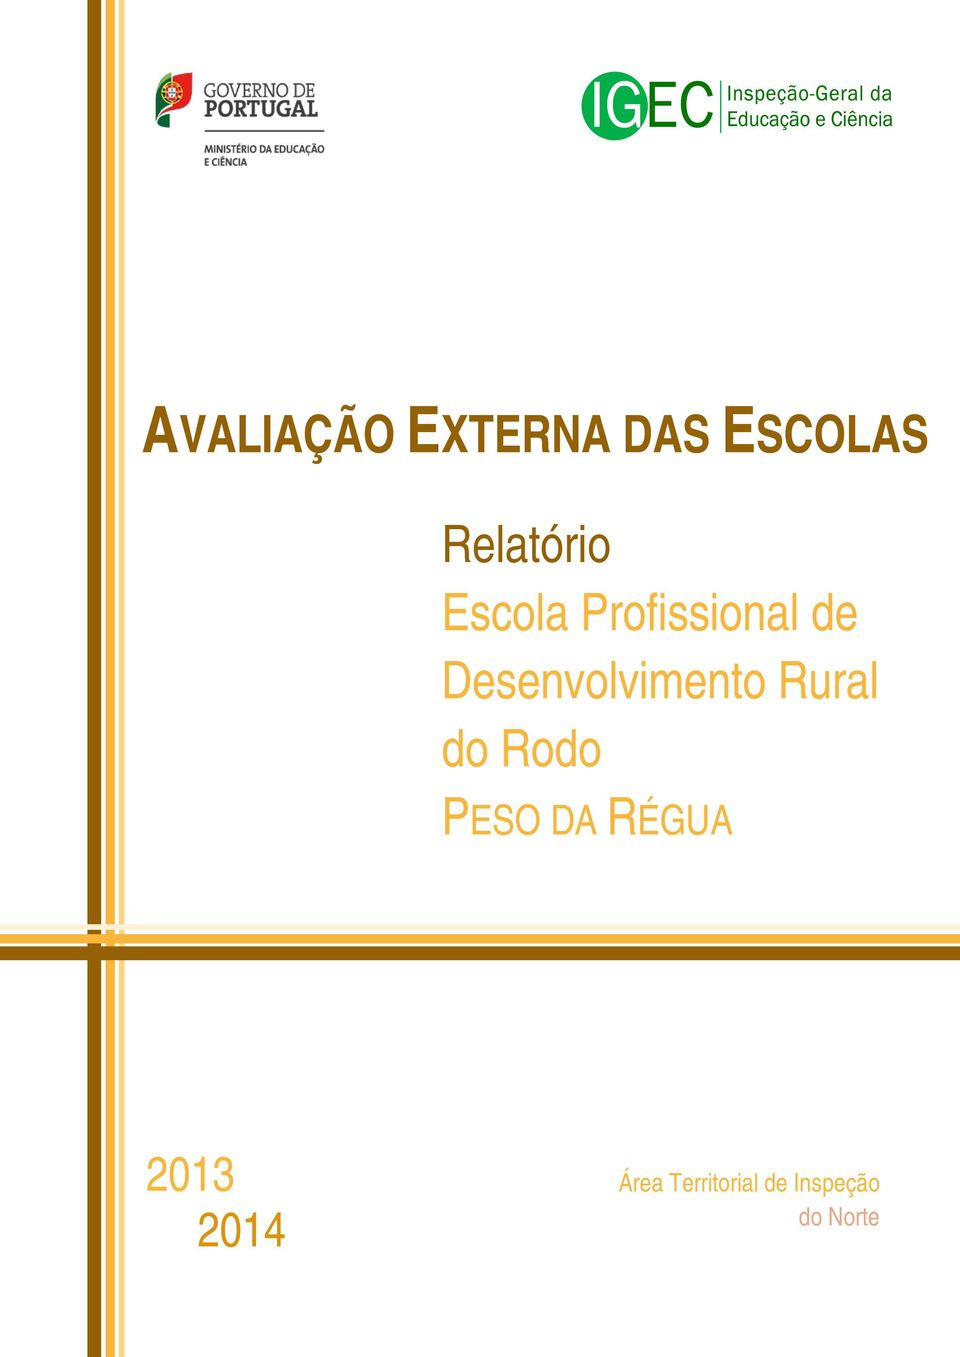 Desenvolvimento Rural do Rodo PESO DA